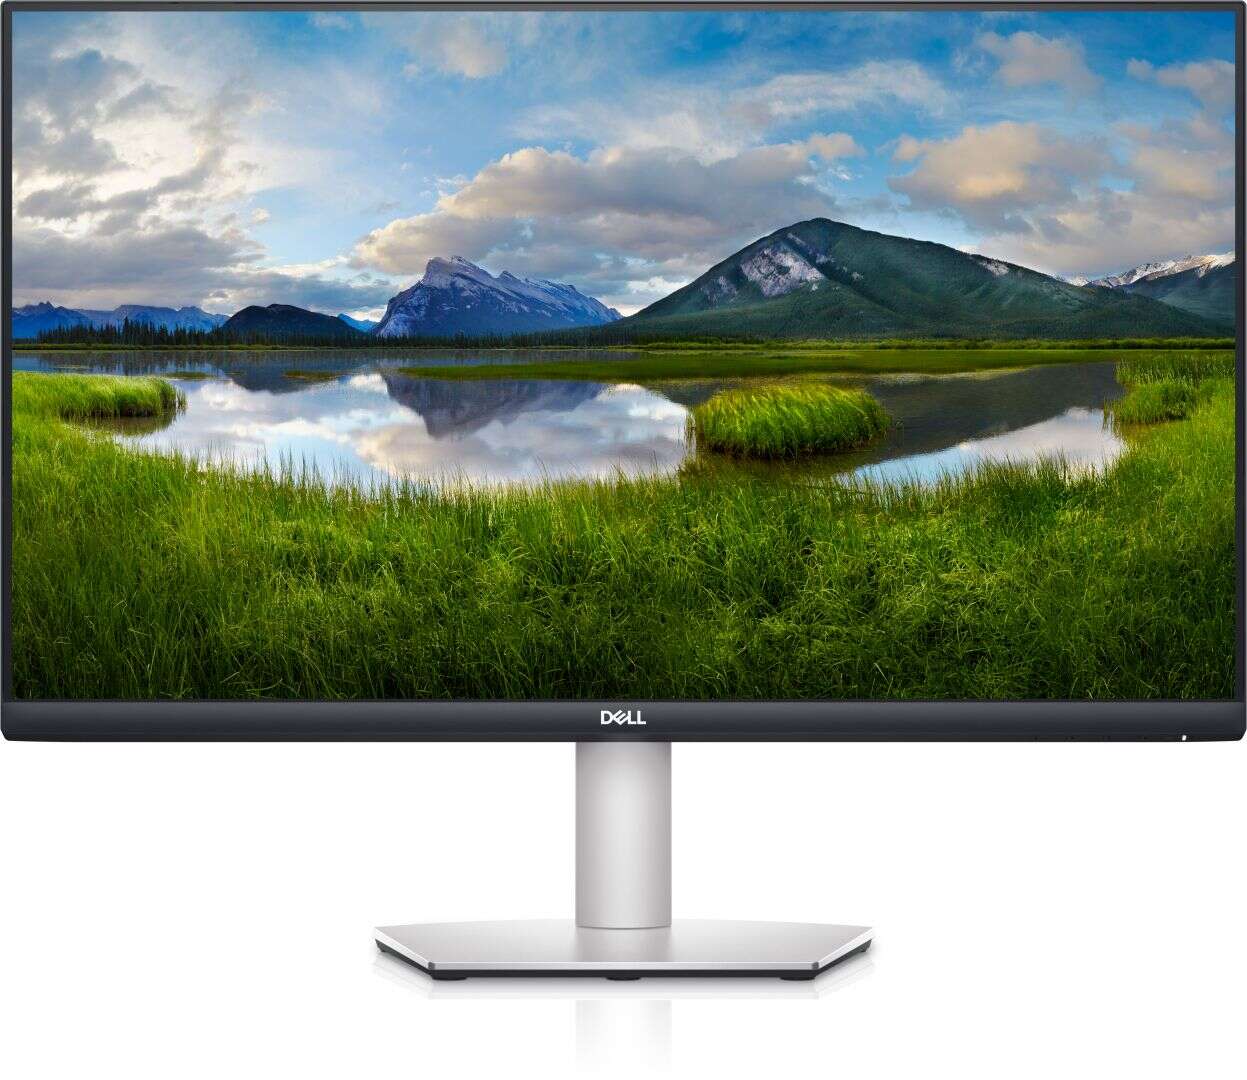 Dell led monitor 27" 4k uhd monitor - s2721qsa - 68.47cm(27")